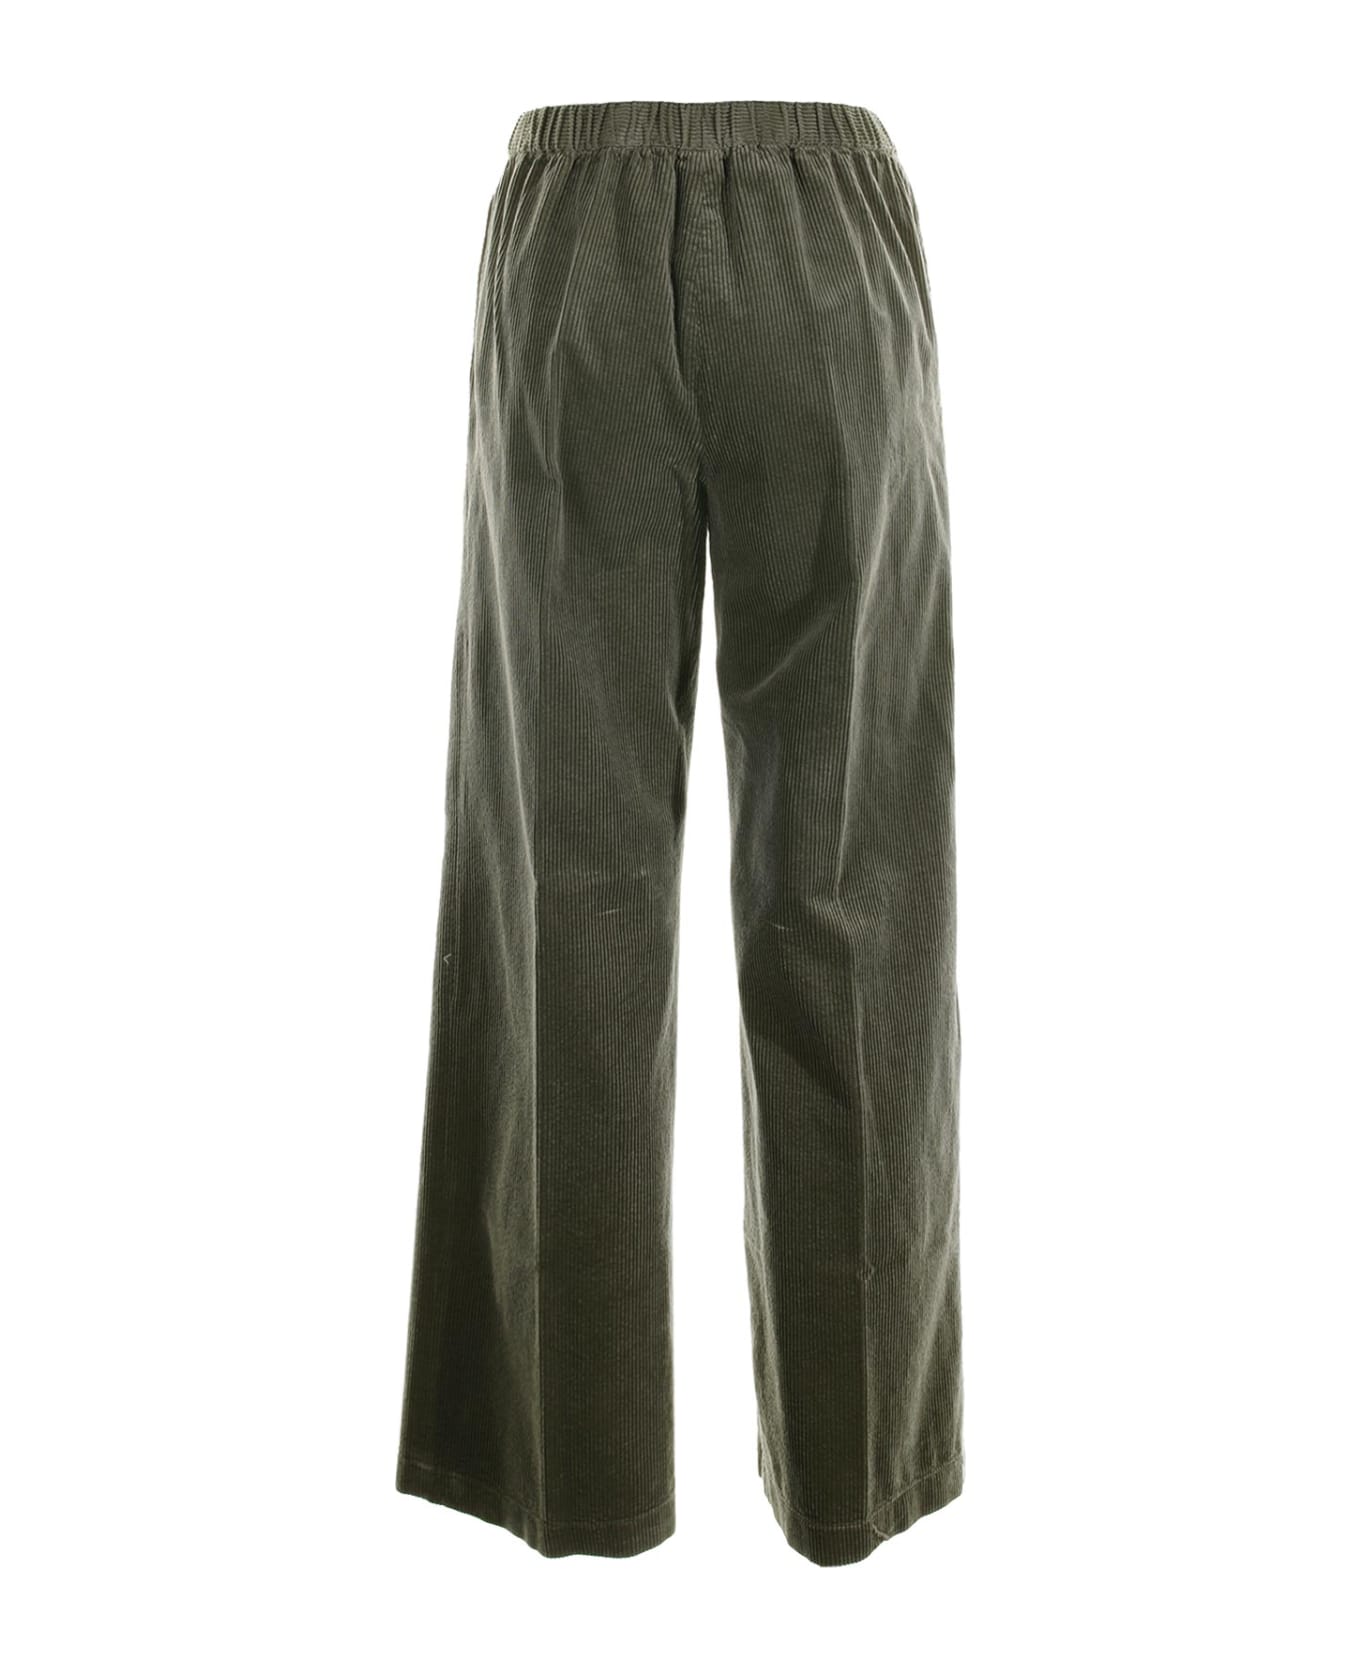 Aspesi Military Green Women's Trousers - MILITARE